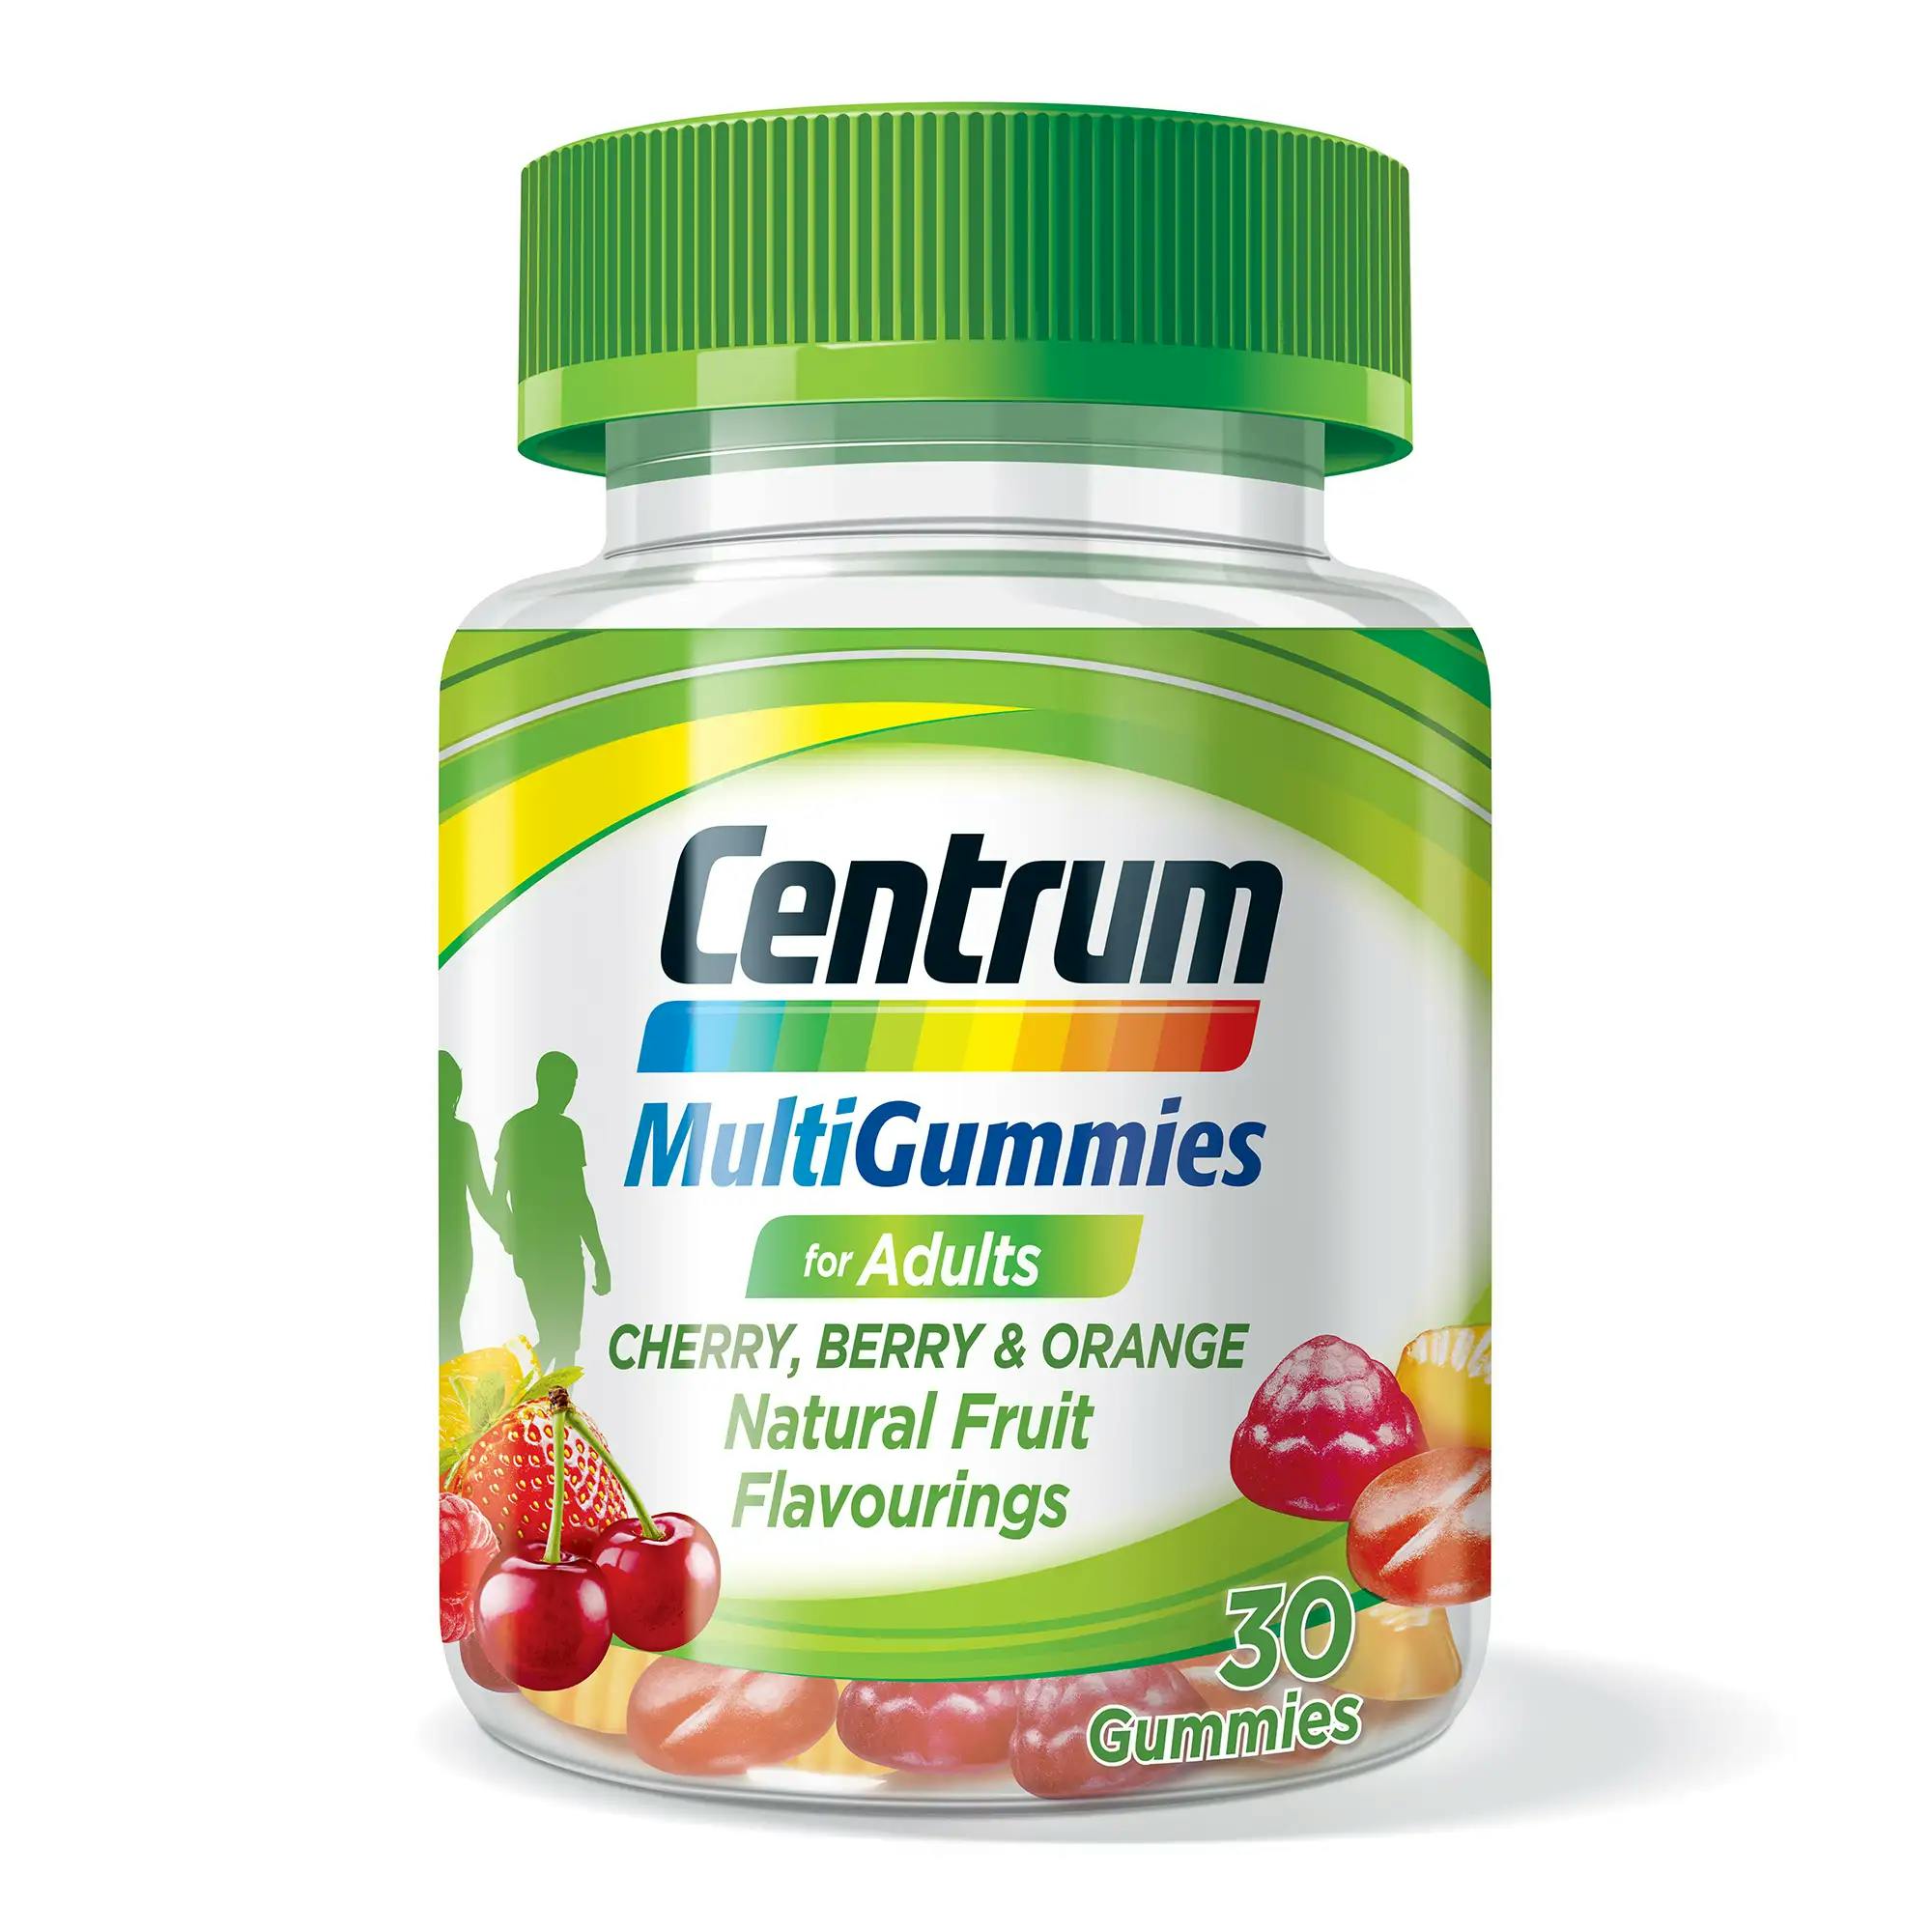 Bottle of centrum MultiGummies vitamins